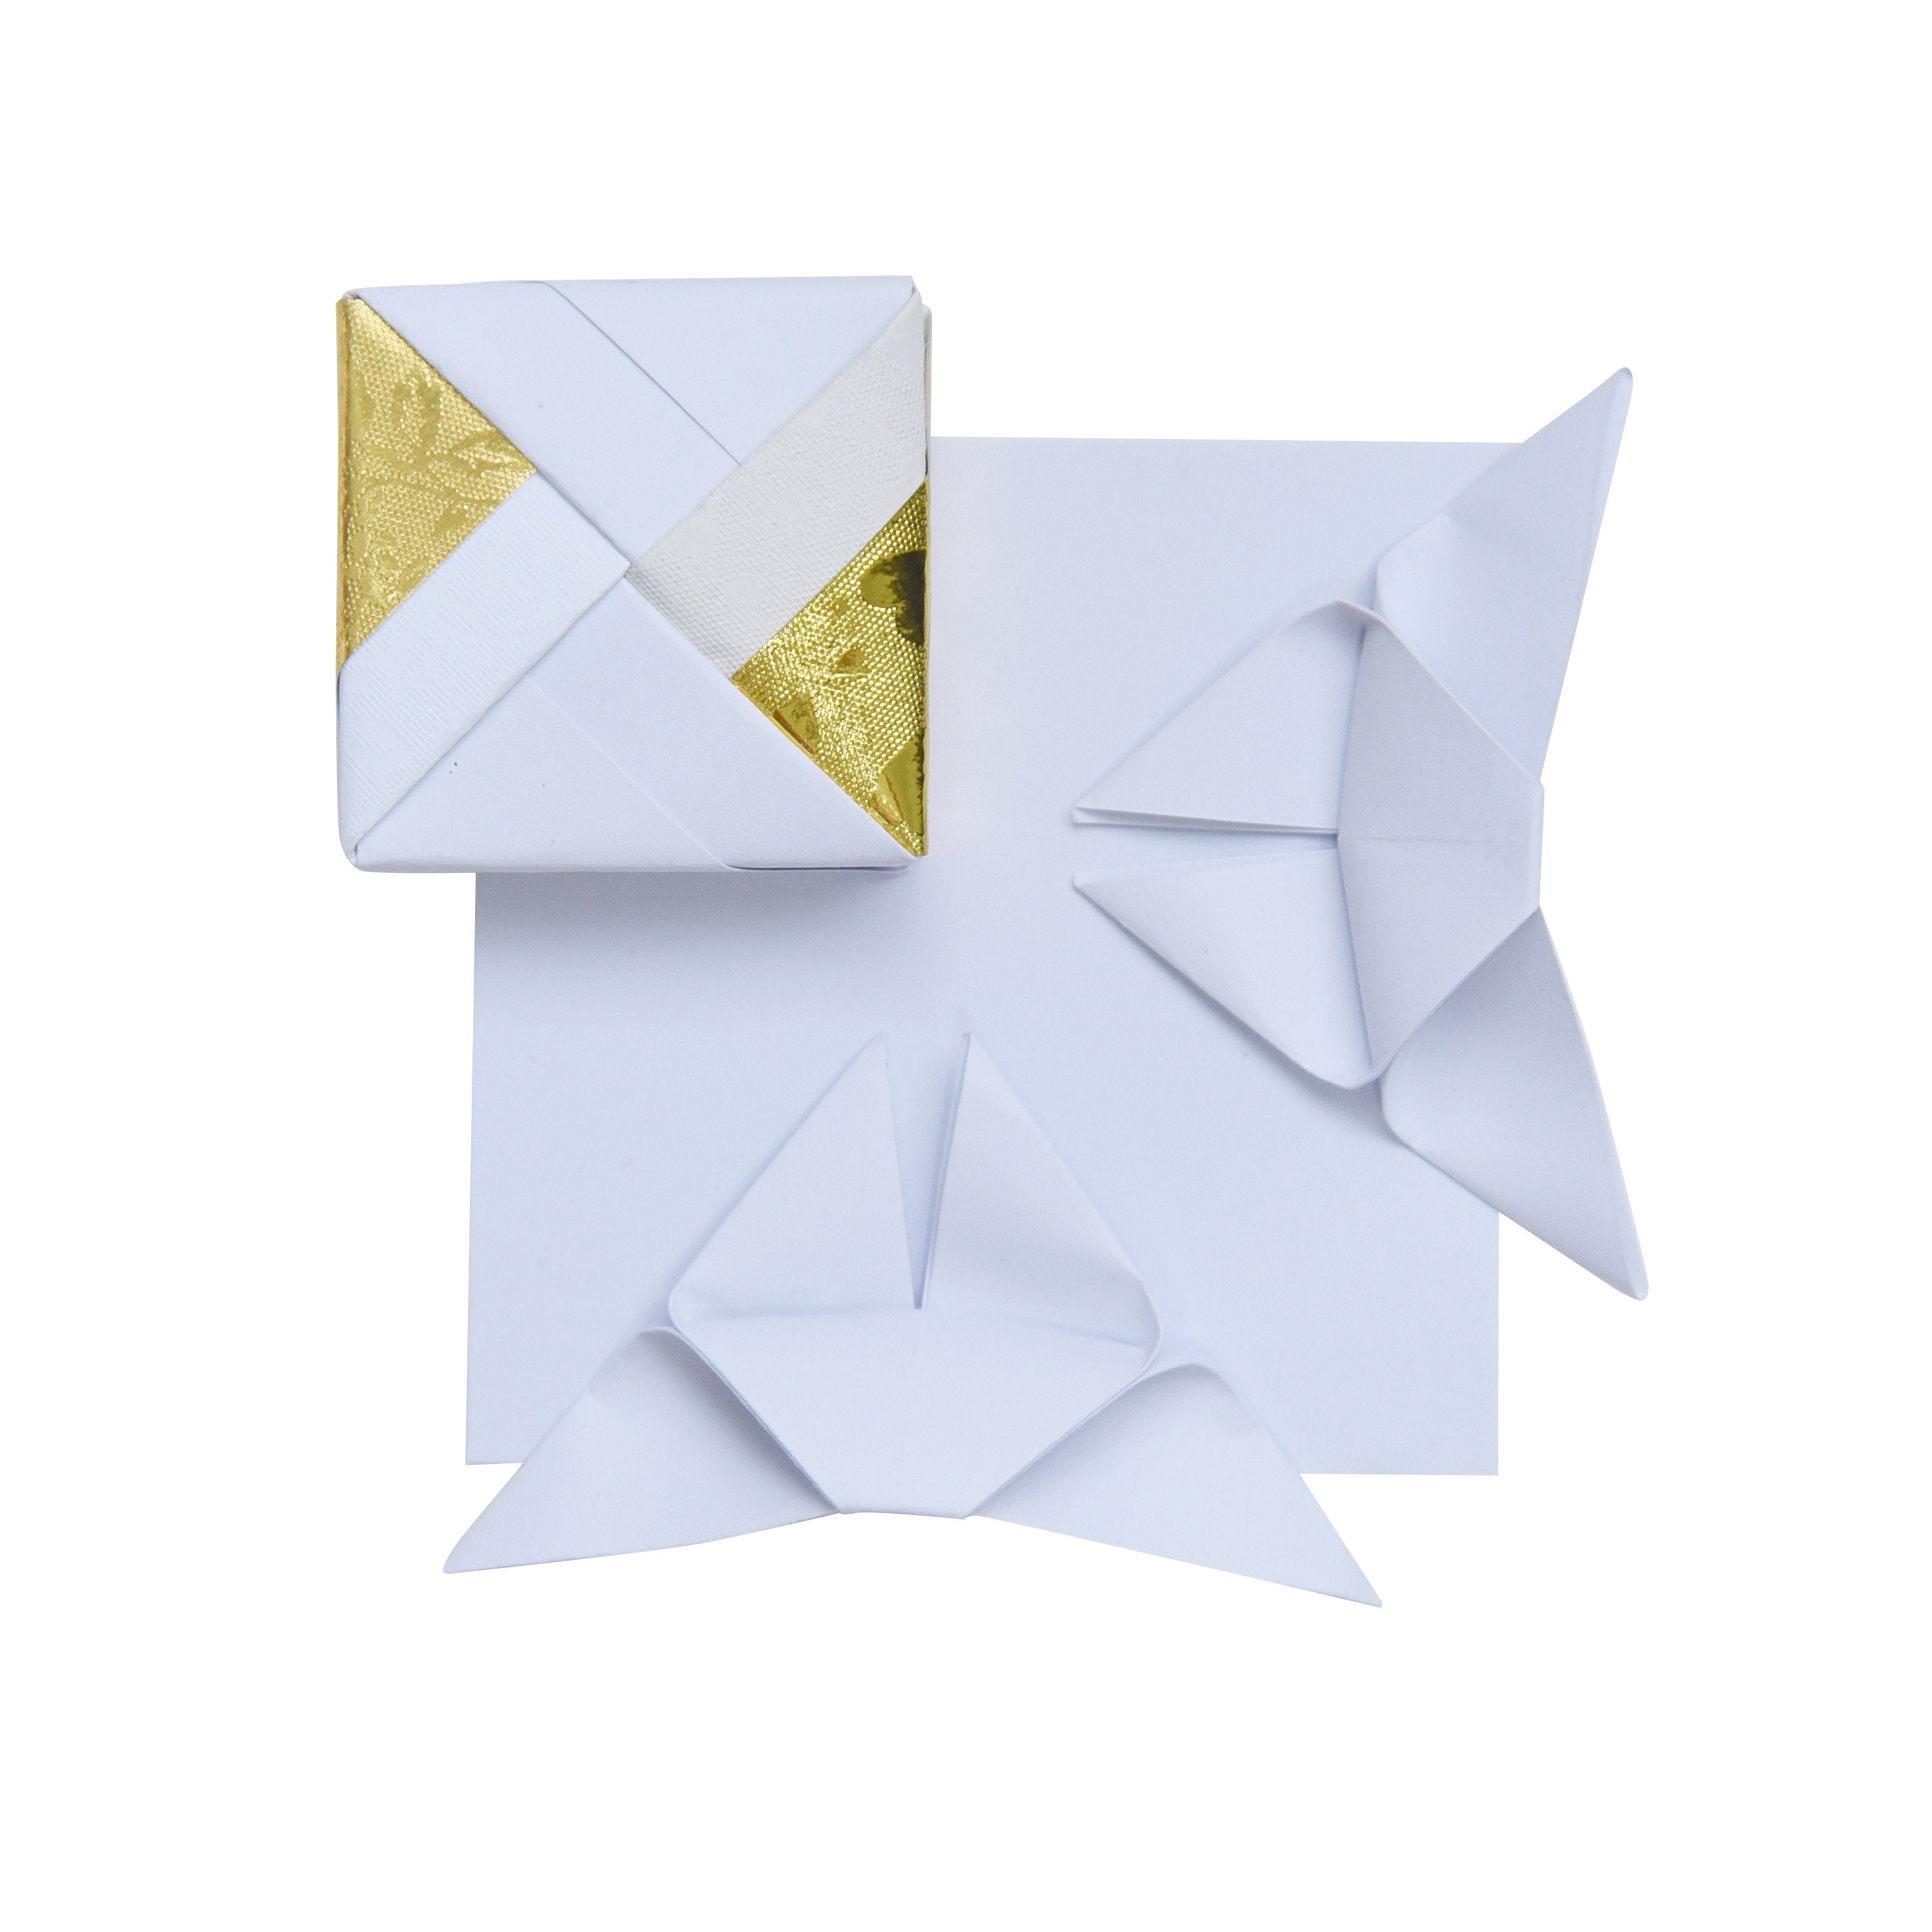 100 fogli di carta origami bianchi - 6x6 pollici - Confezione di carta quadrata per piegare, gru origami e decorazioni